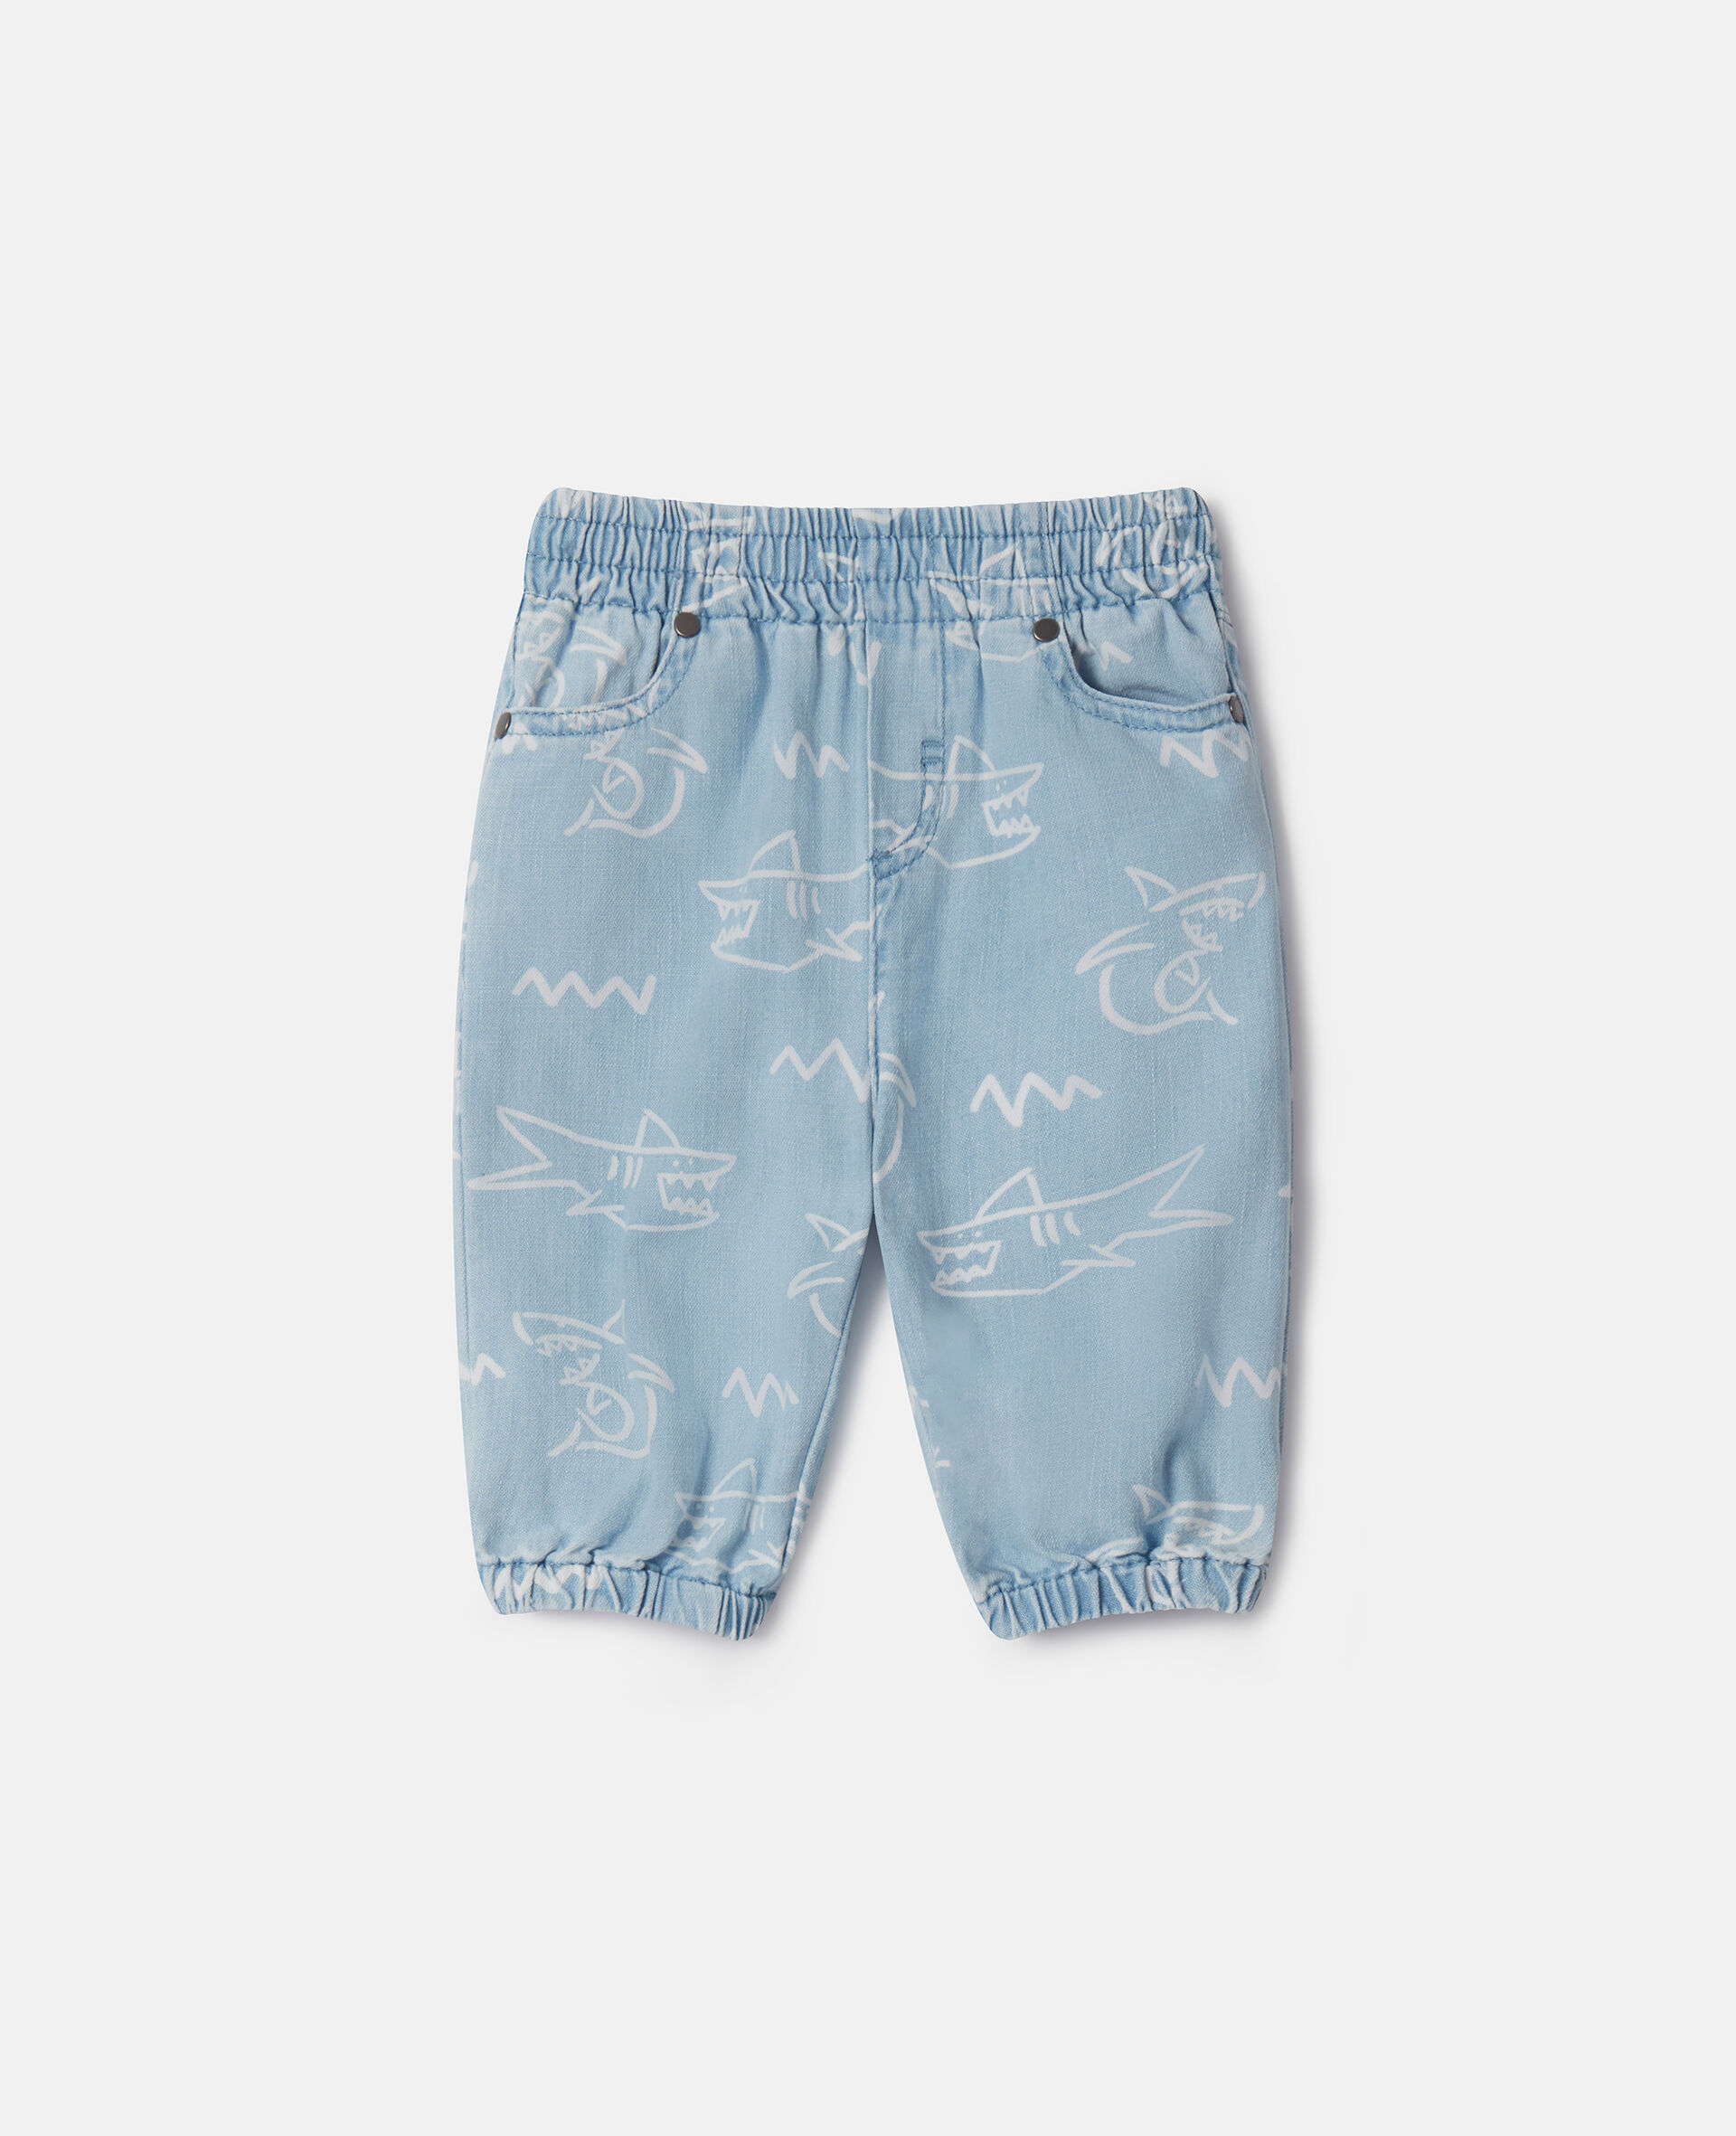 Shark Print Baby Jeans-Blue-large image number 0